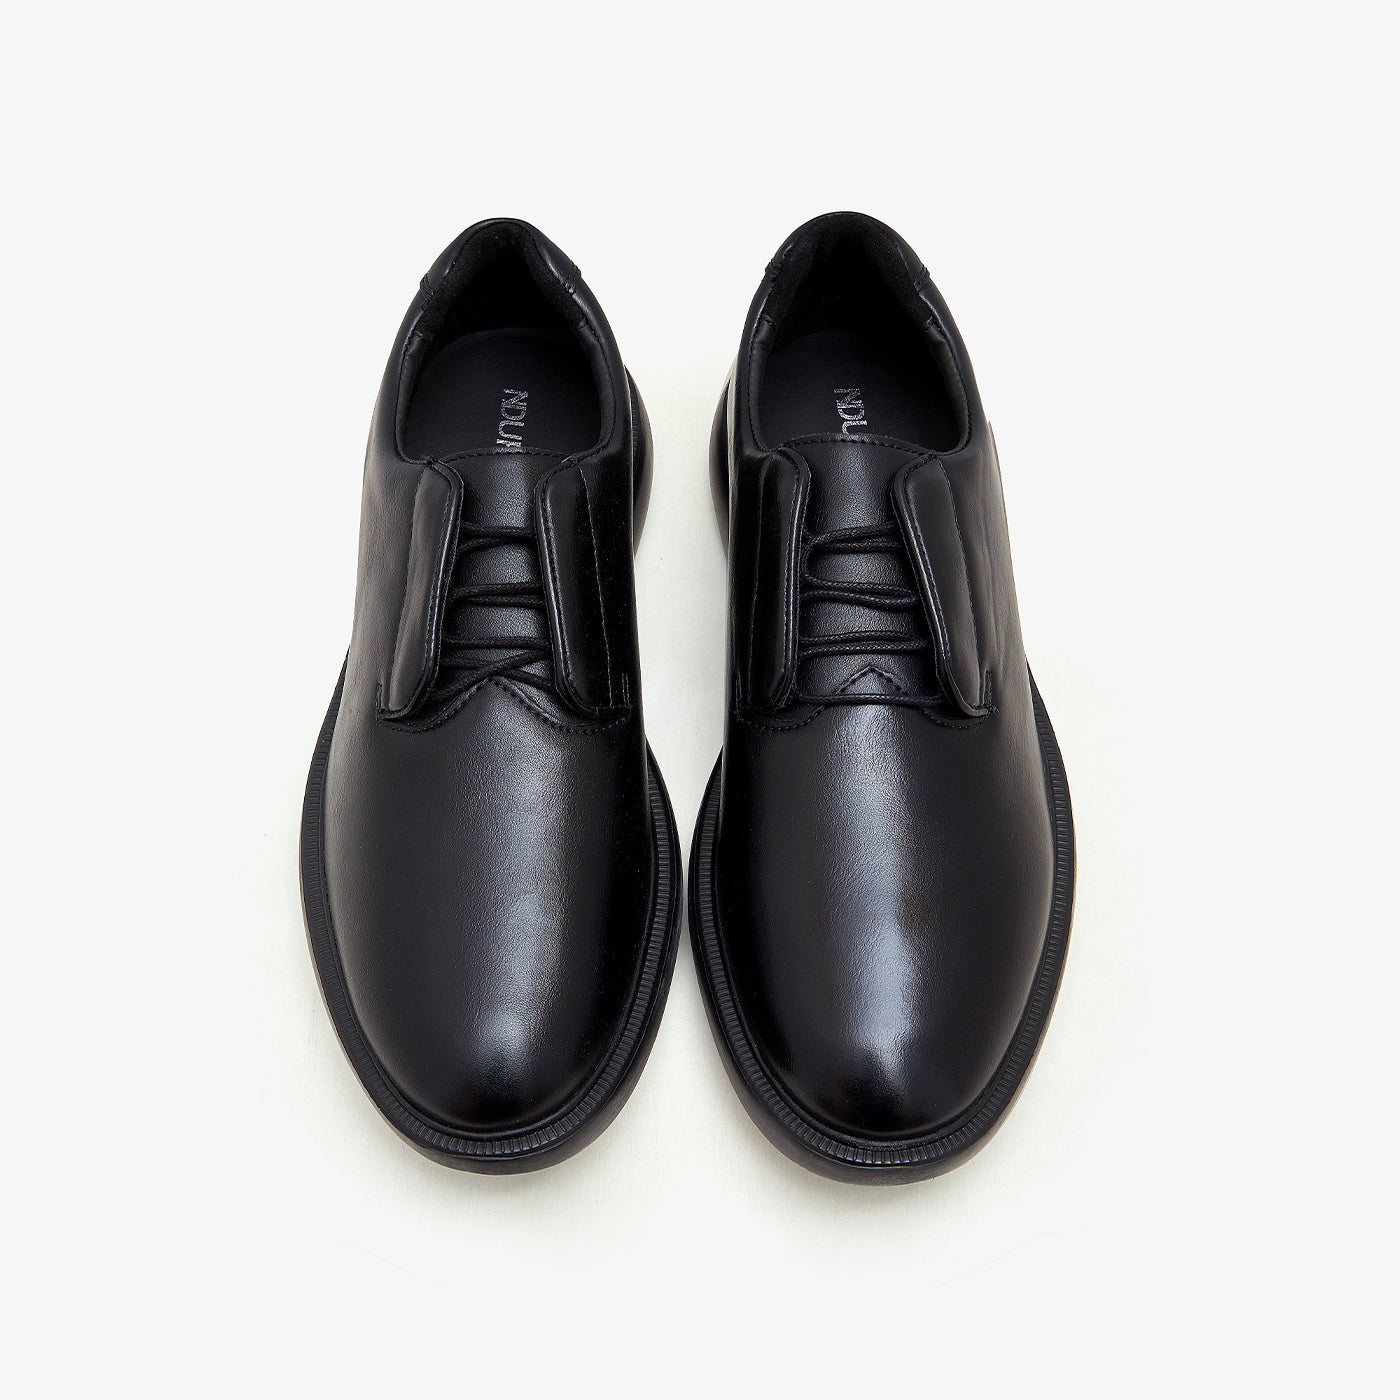 Men's Evening Formal Shoes